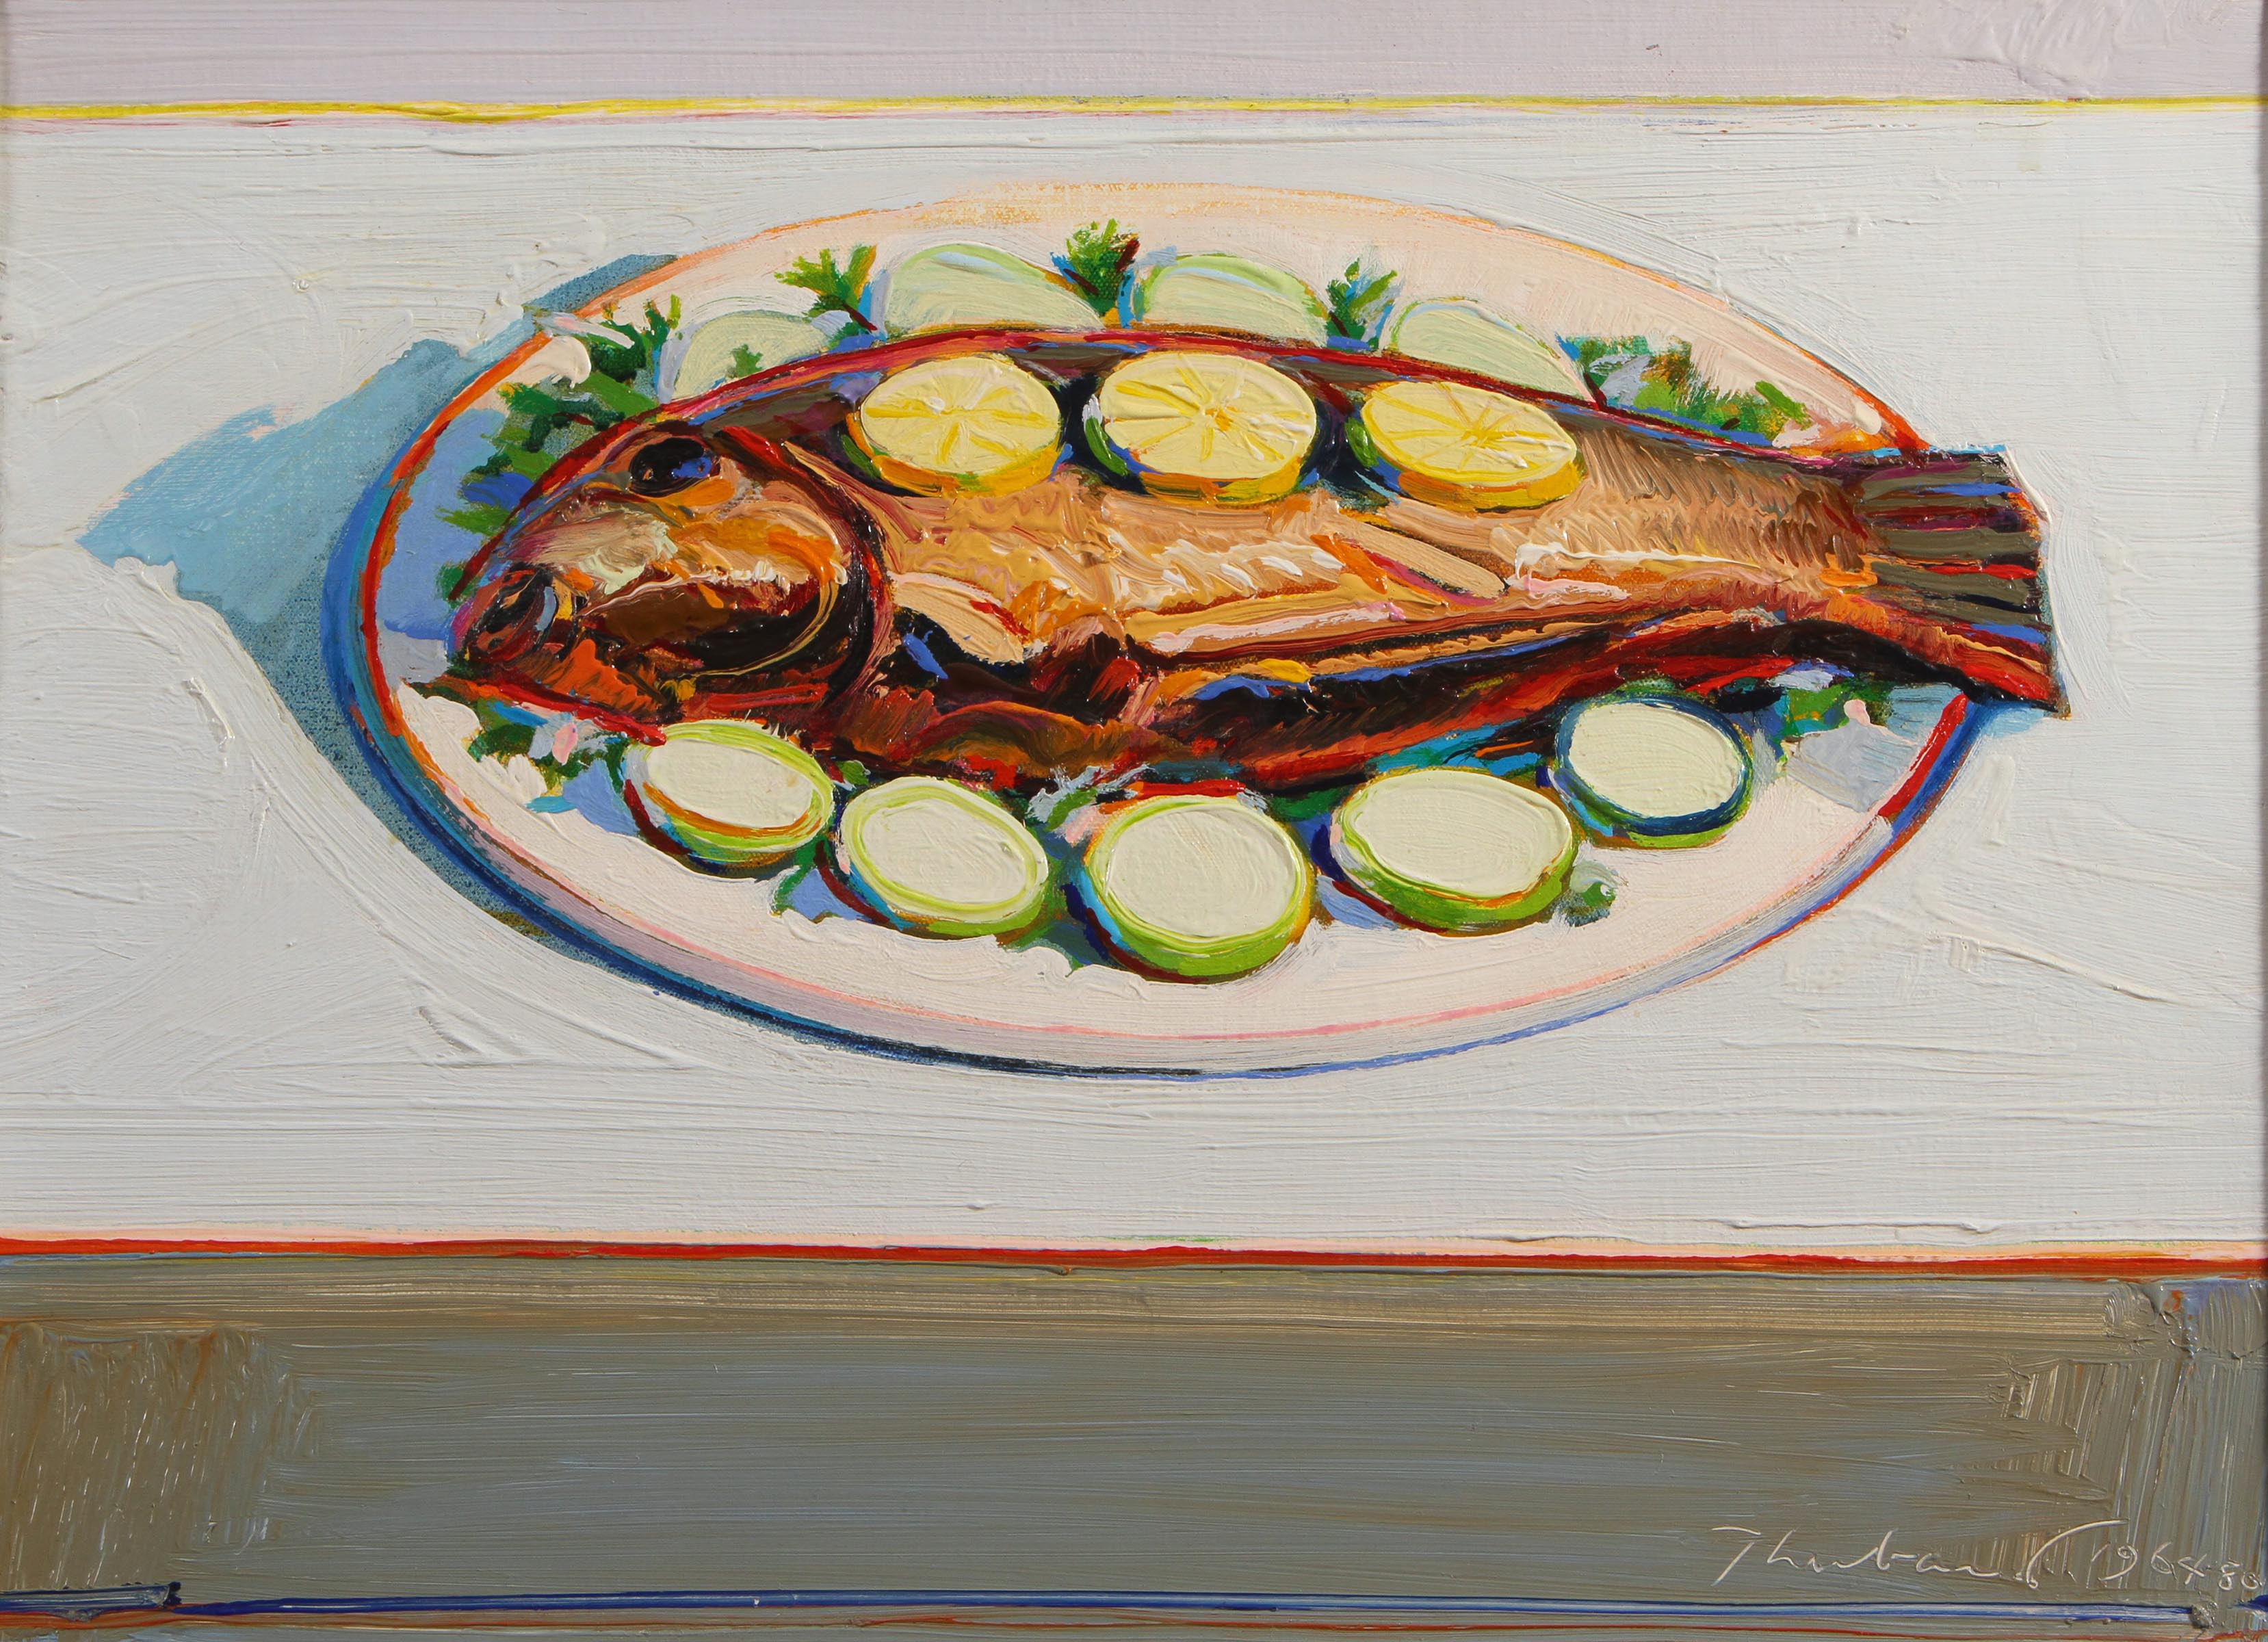 Wayne Thiebaud, "Fish Platter," 1964-80, Oil paints on canvas. Image courtesy VAGA.